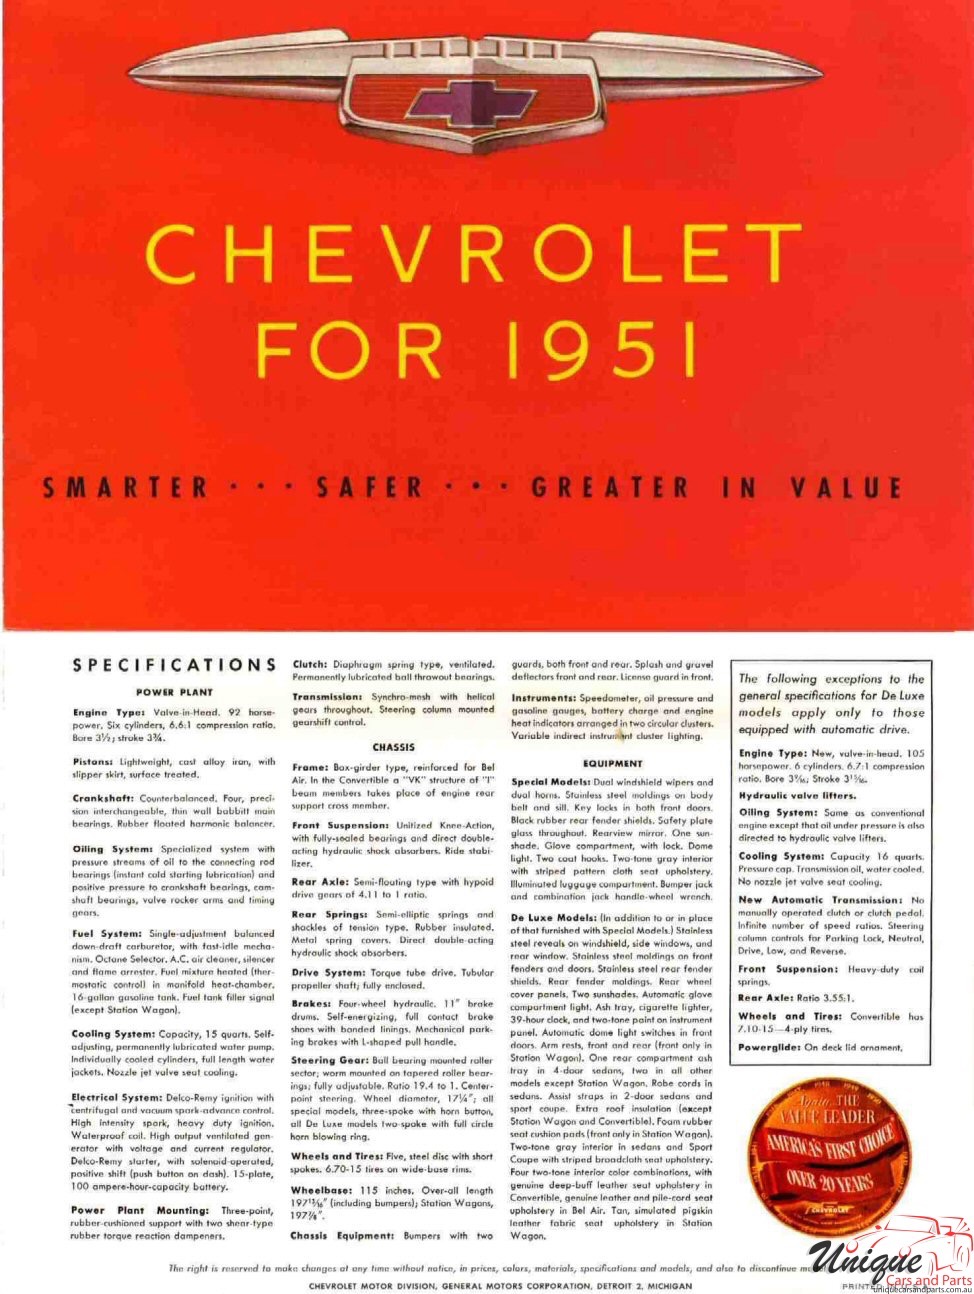 1951 Chevrolet Foldout Page 2